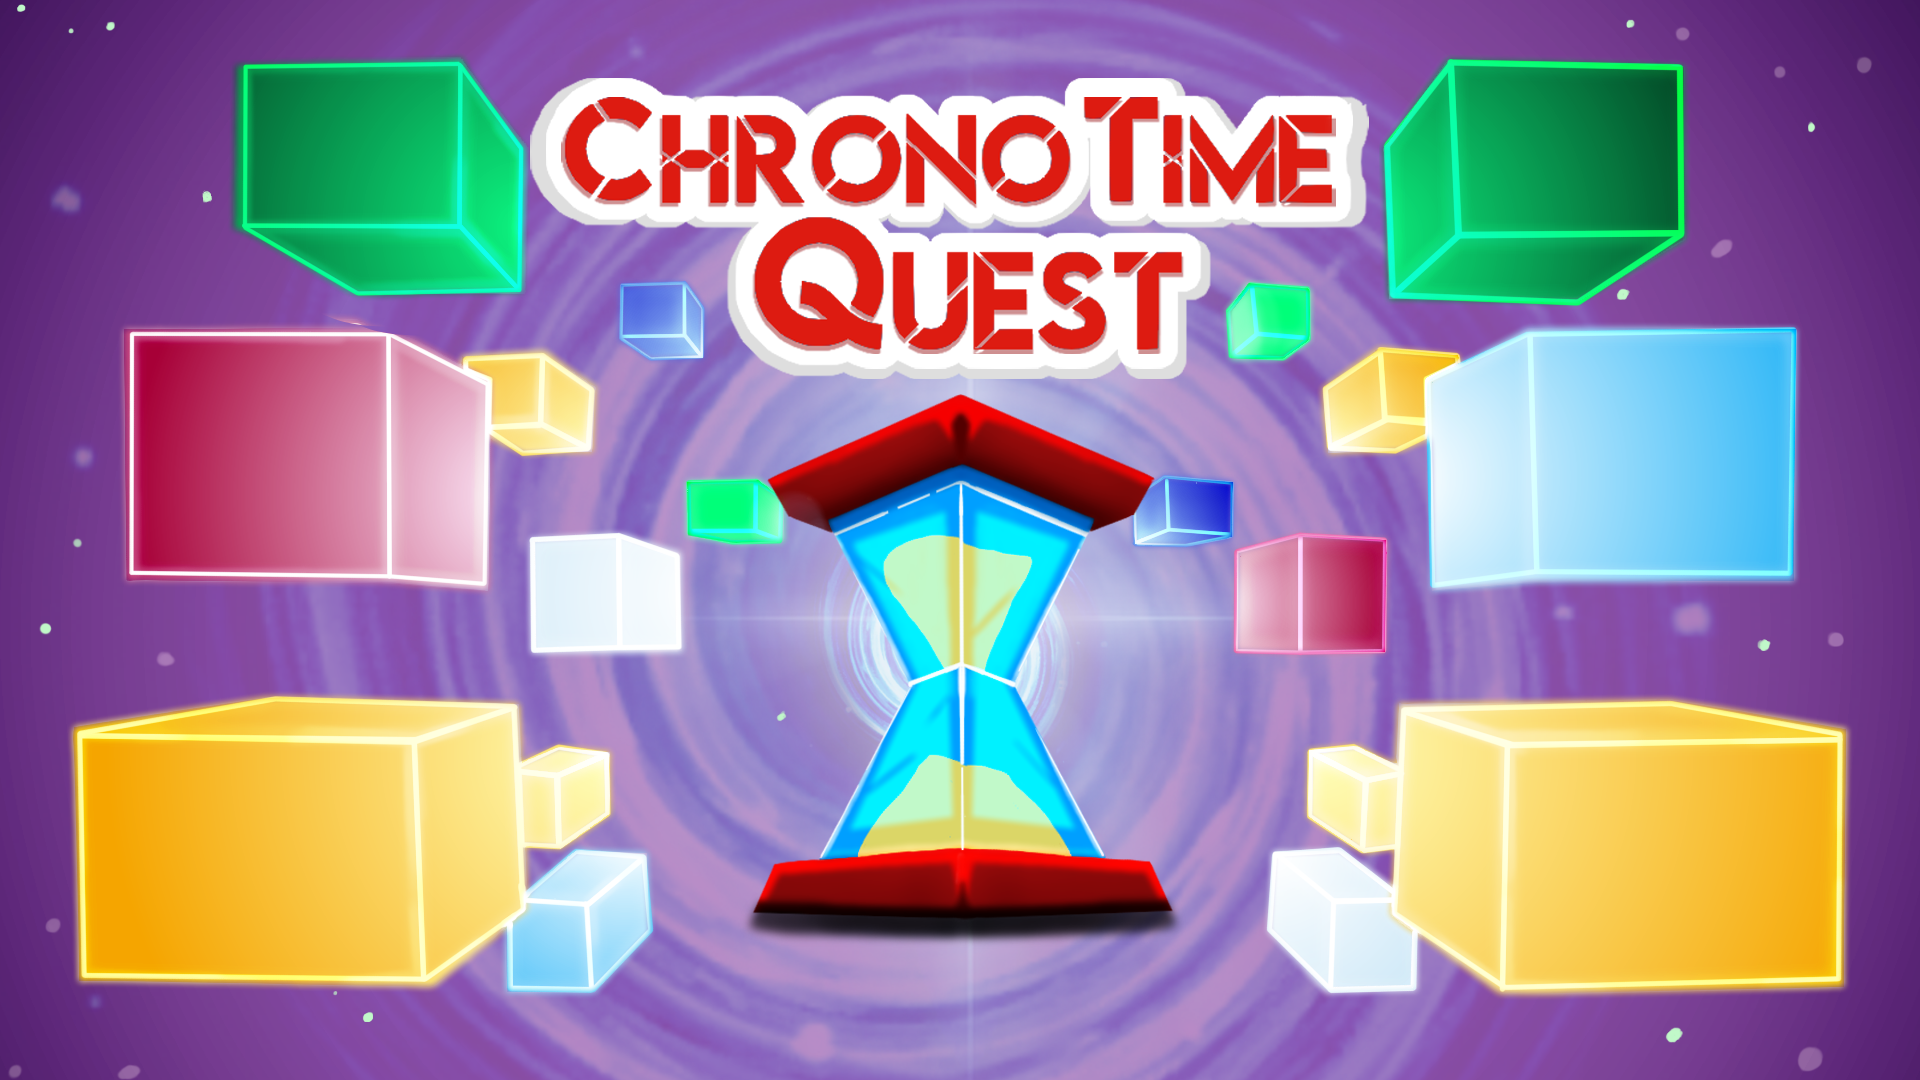 Chrono Time Quest